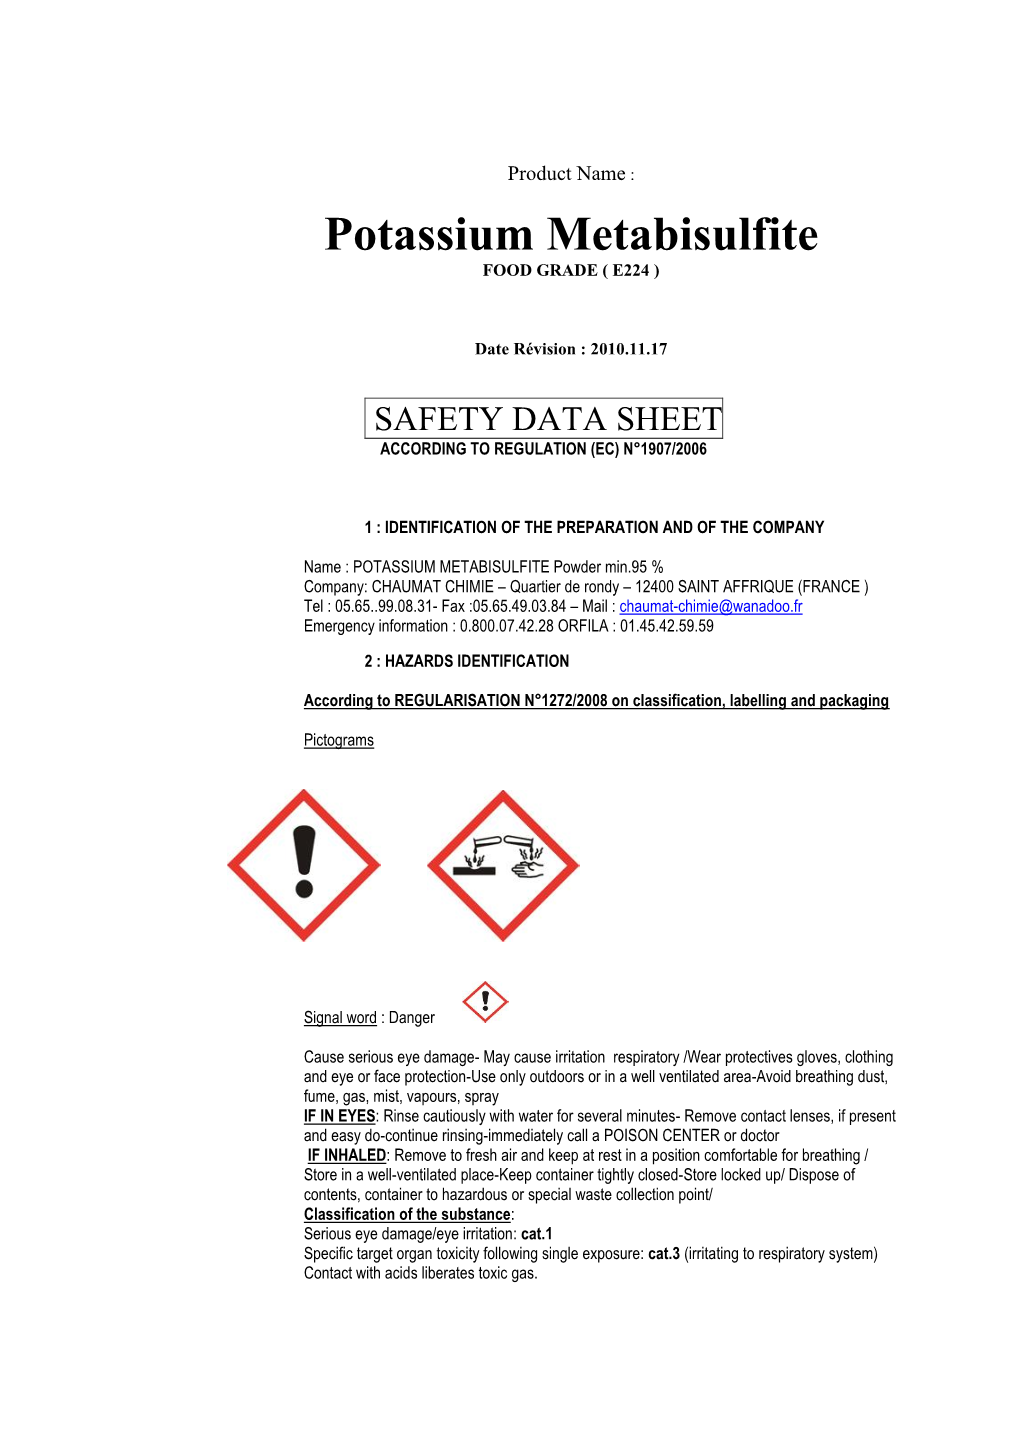 Potassium Metabisulfite Chaumat Chimie